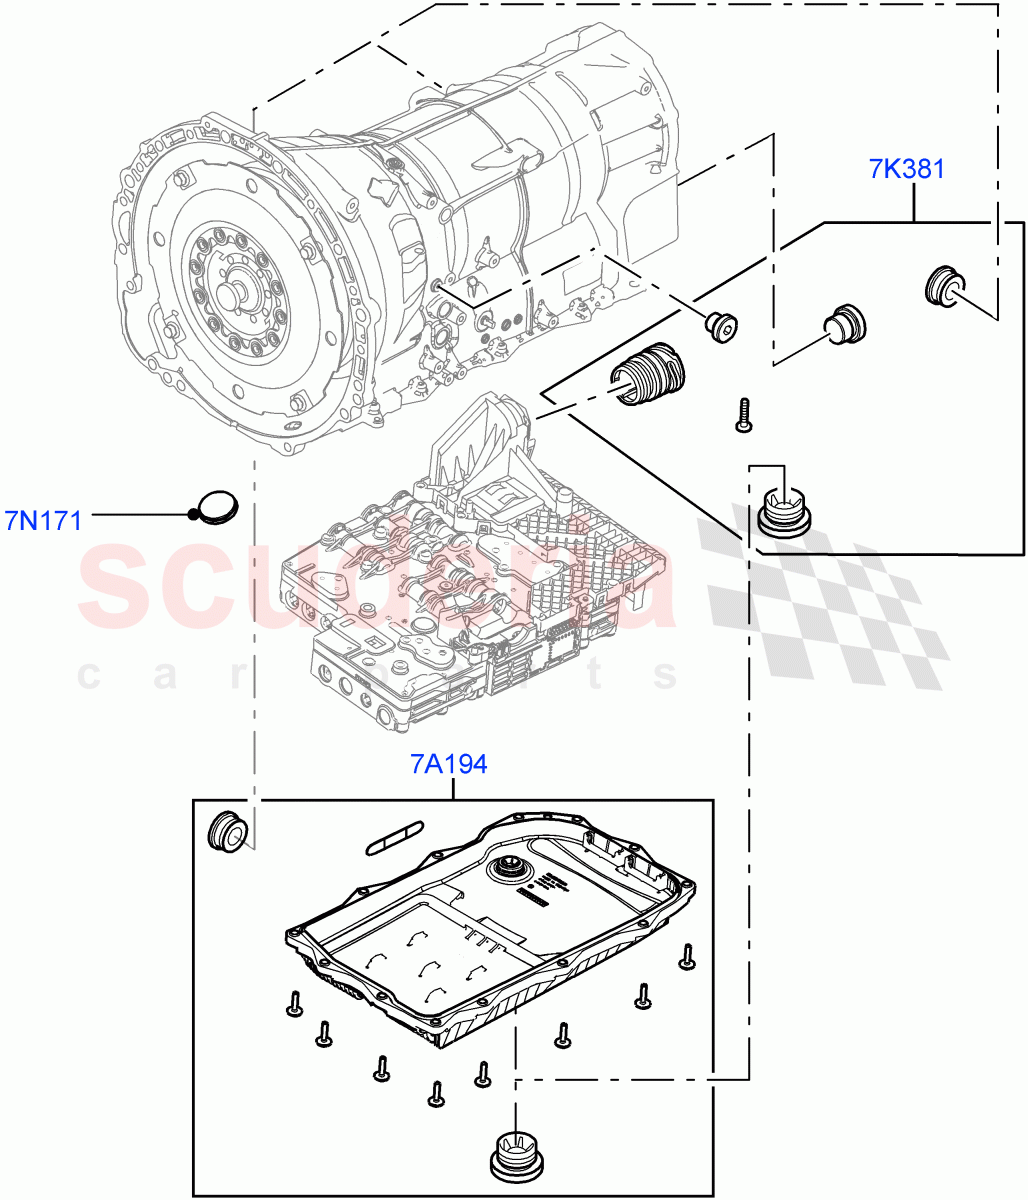 Transmission External Components(Nitra Plant Build)(2.0L I4 DSL HIGH DOHC AJ200,8 Speed Auto Trans ZF 8HP70 4WD,5.0 Petrol AJ133 DOHC CDA)((V)FROMK2000001) of Land Rover Land Rover Defender (2020+) [5.0 OHC SGDI SC V8 Petrol]